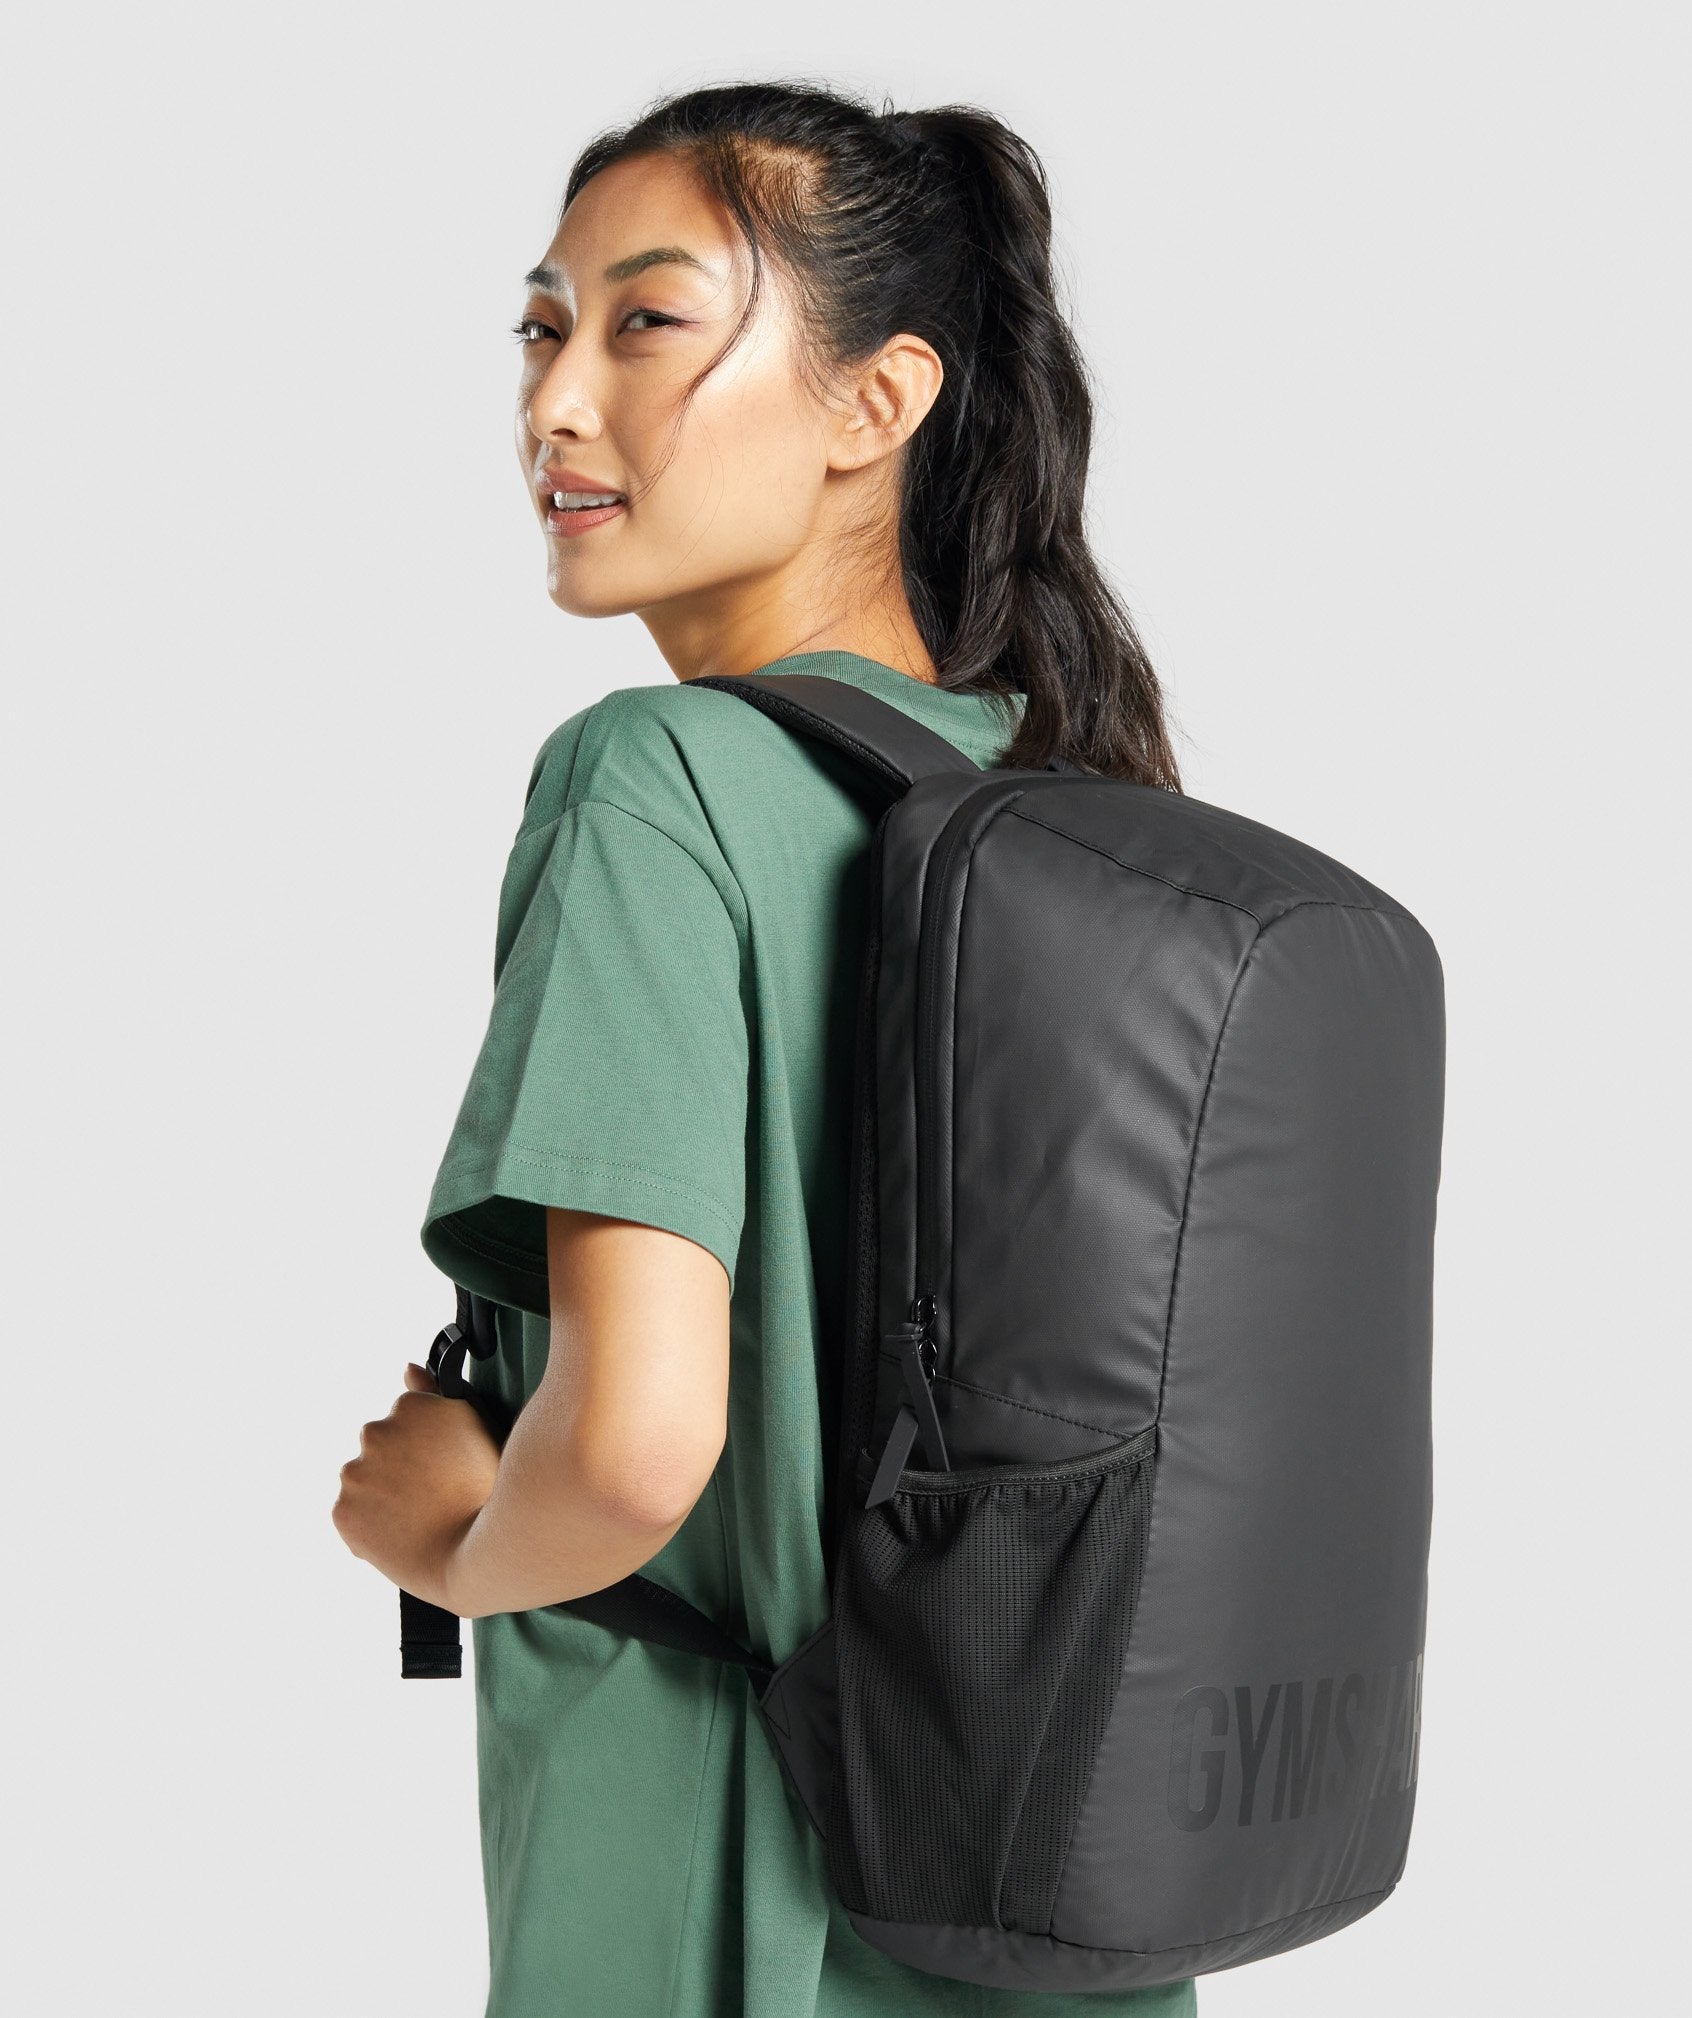 X-Series 0.1 Backpack in Black - view 5